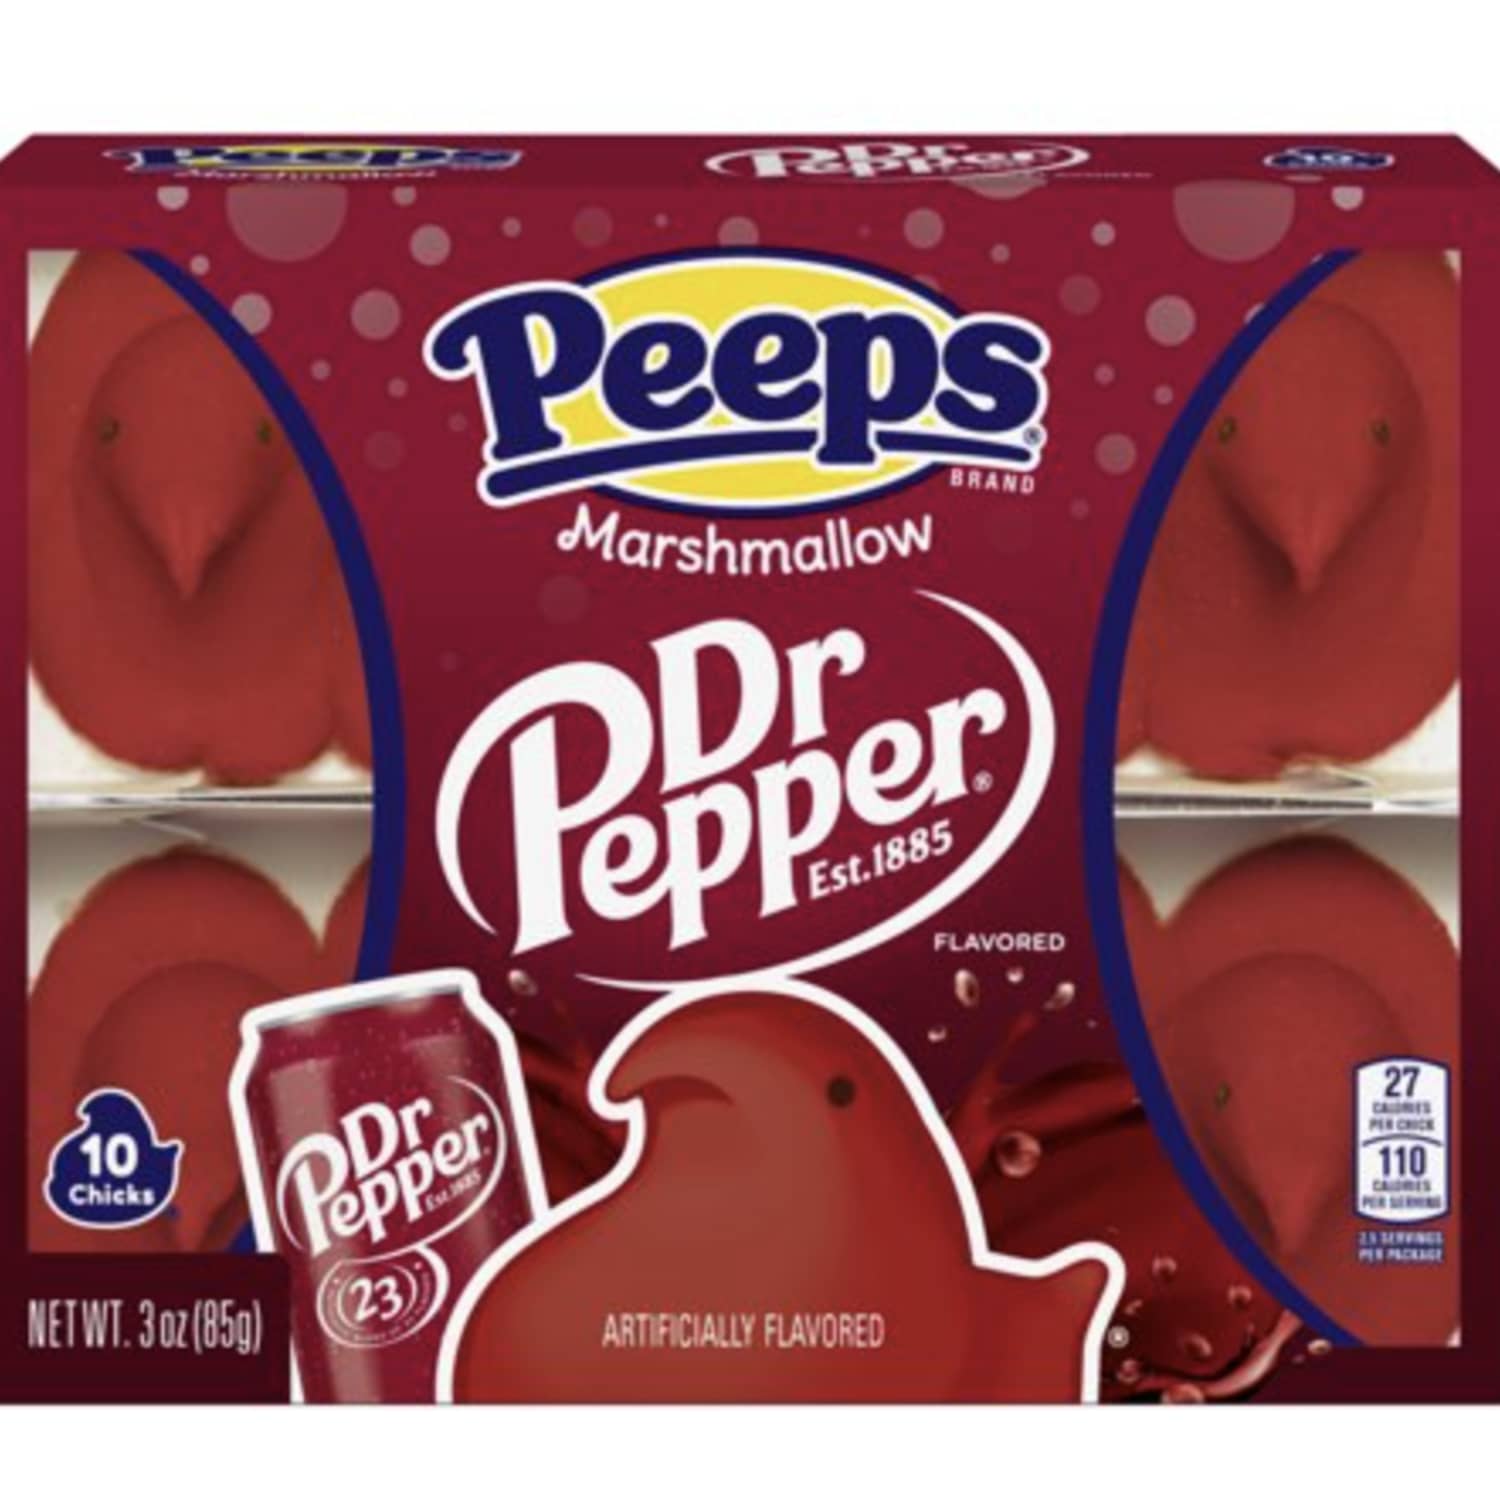 Peeps Dr. Pepper Flavored Marshmallow Chicks, 3oz